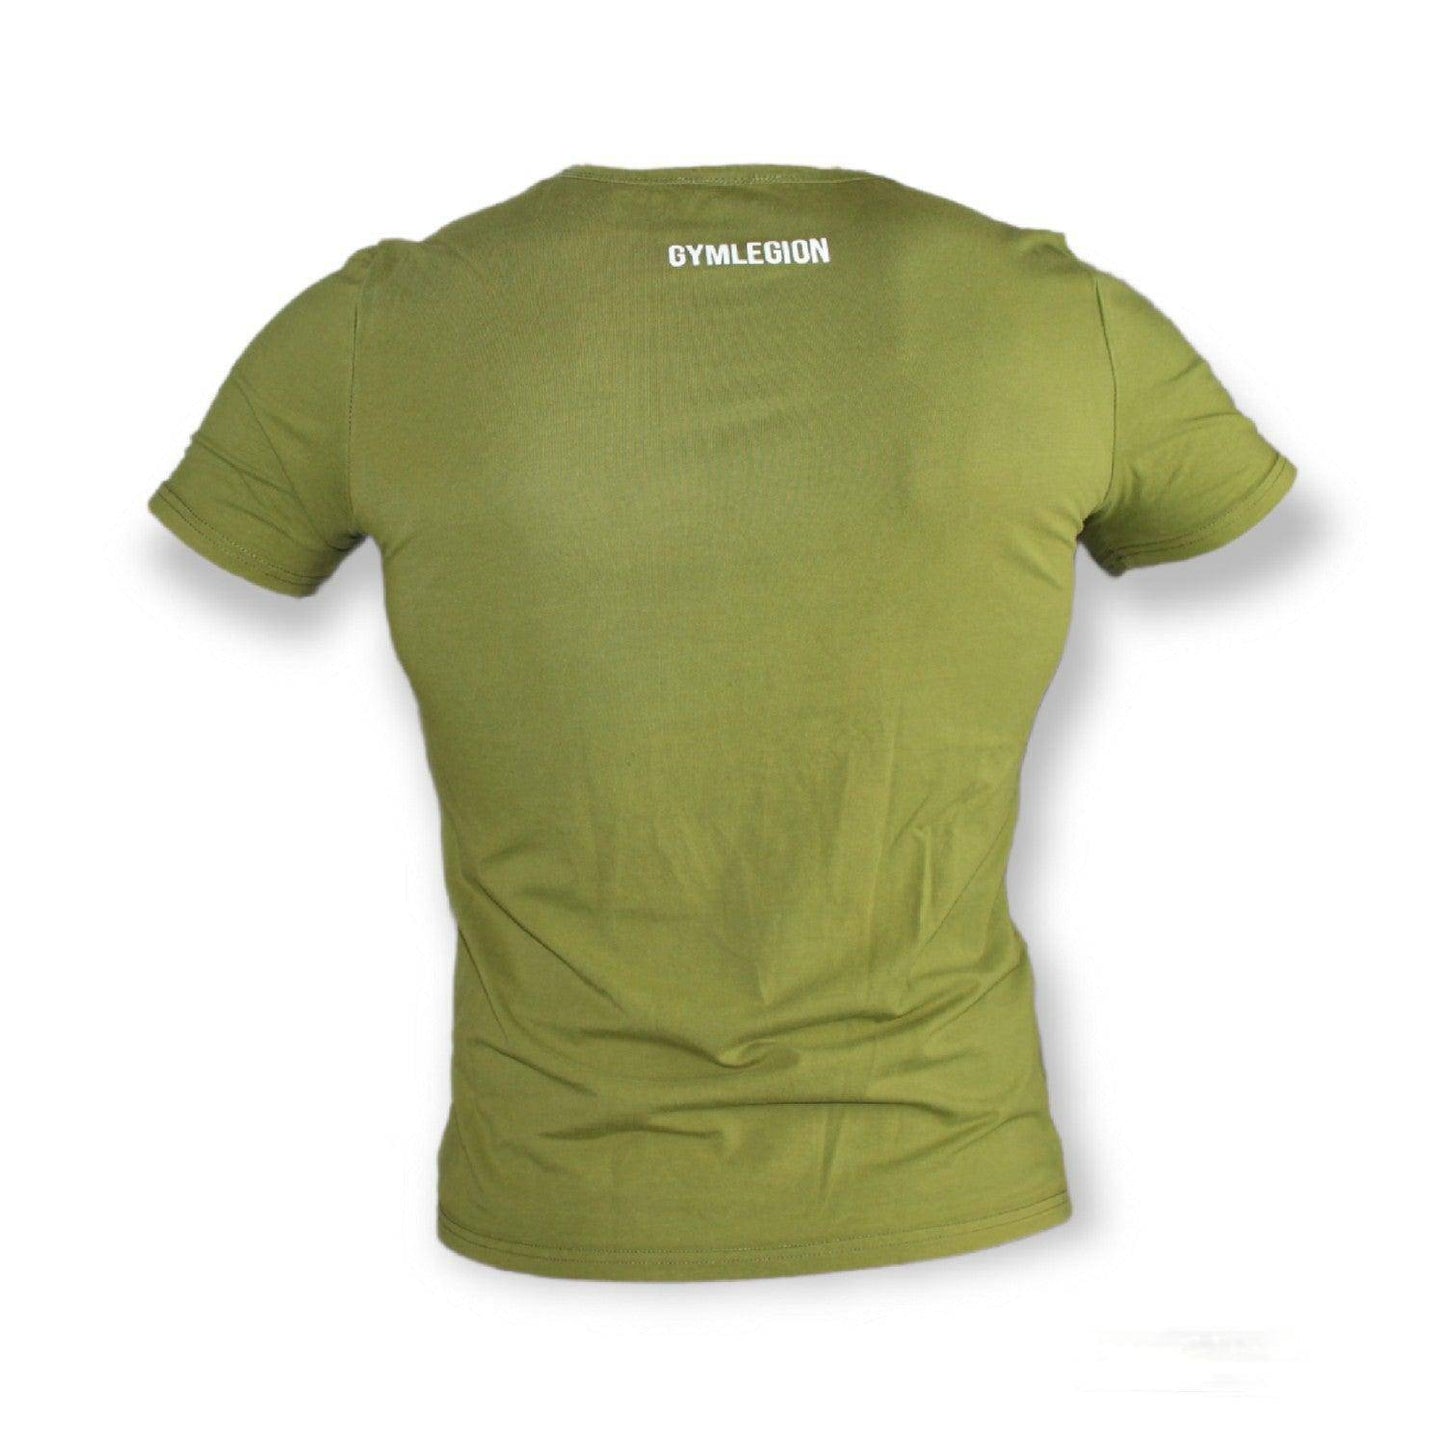 Arrival Fitness T-shirt - Army Green - Gymlegion